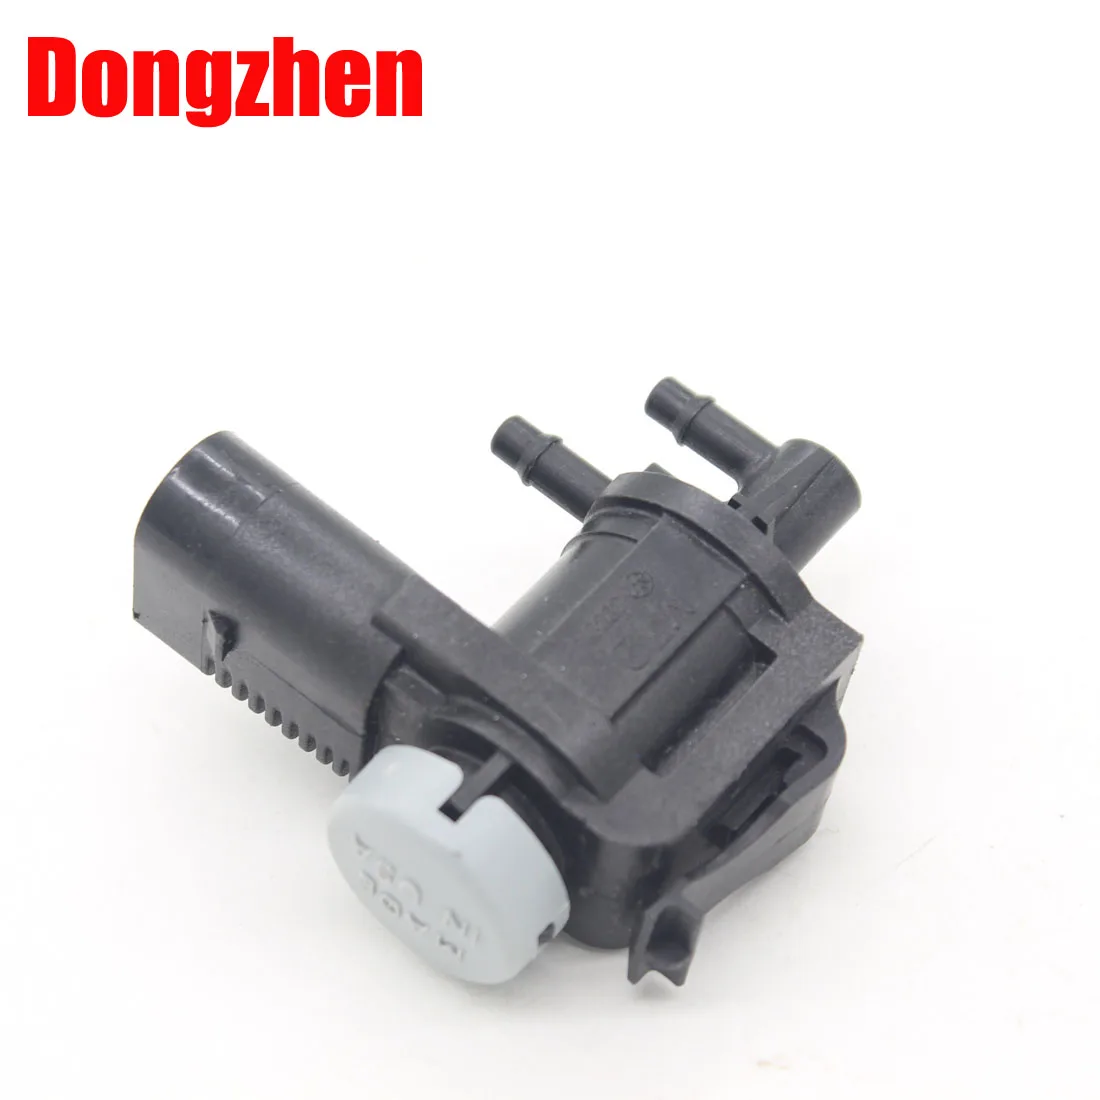 Dongzhen OEM натуральная EGR вакуумный электромагнитный клапан, которые подходят для VW Jetta 4 Golf 4 Bora Passat B6 B7 cc Beetle Polo 1K0 906 283 A